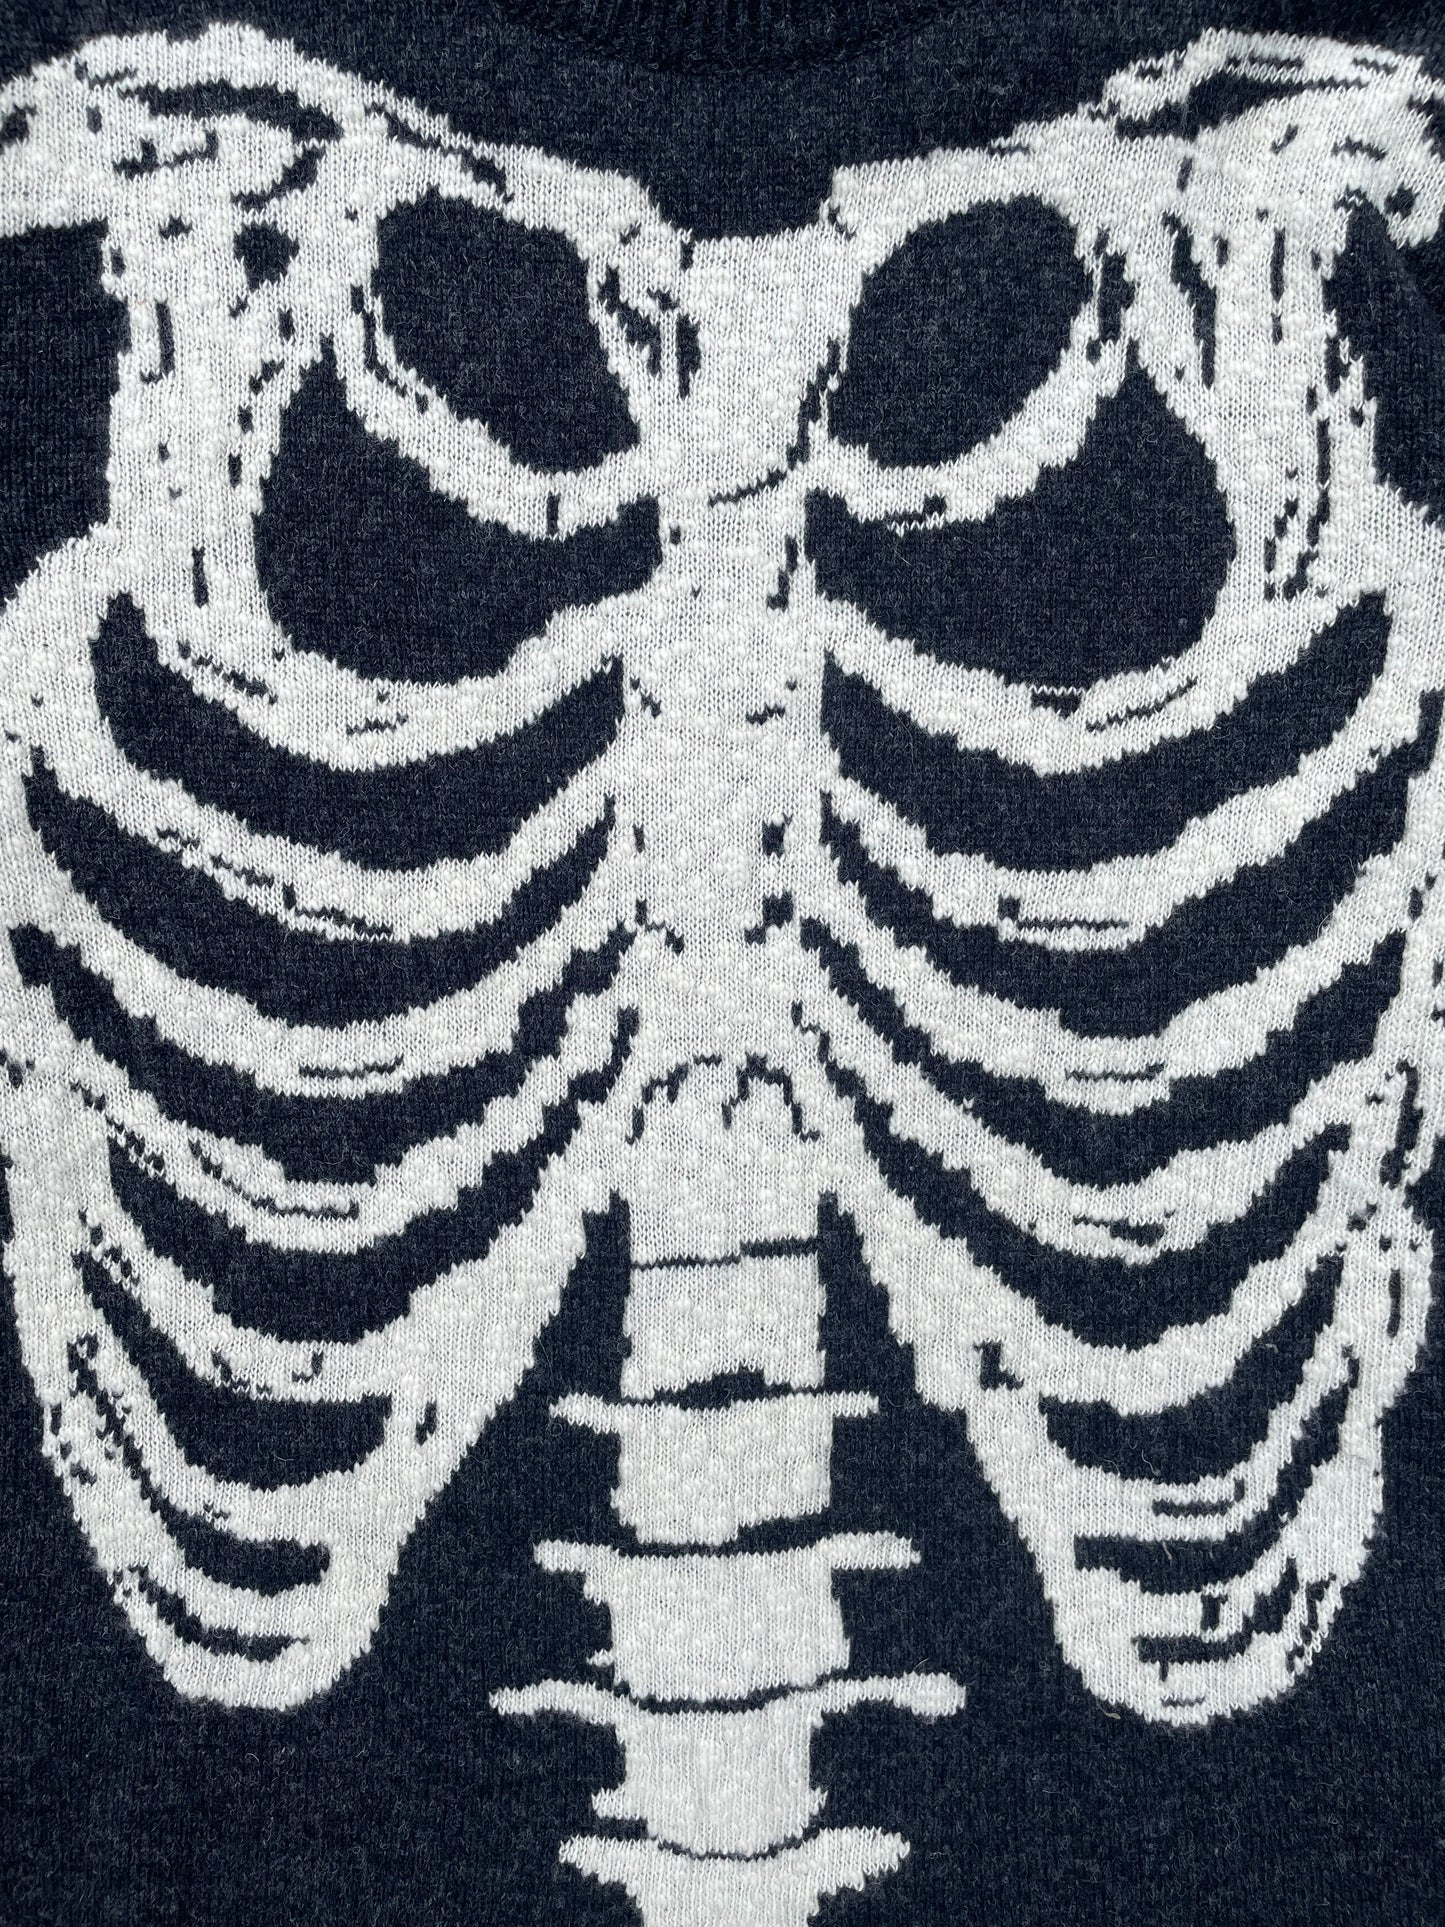 FW18 Saint Laurent Skeleton Intarsia Knit Sweater